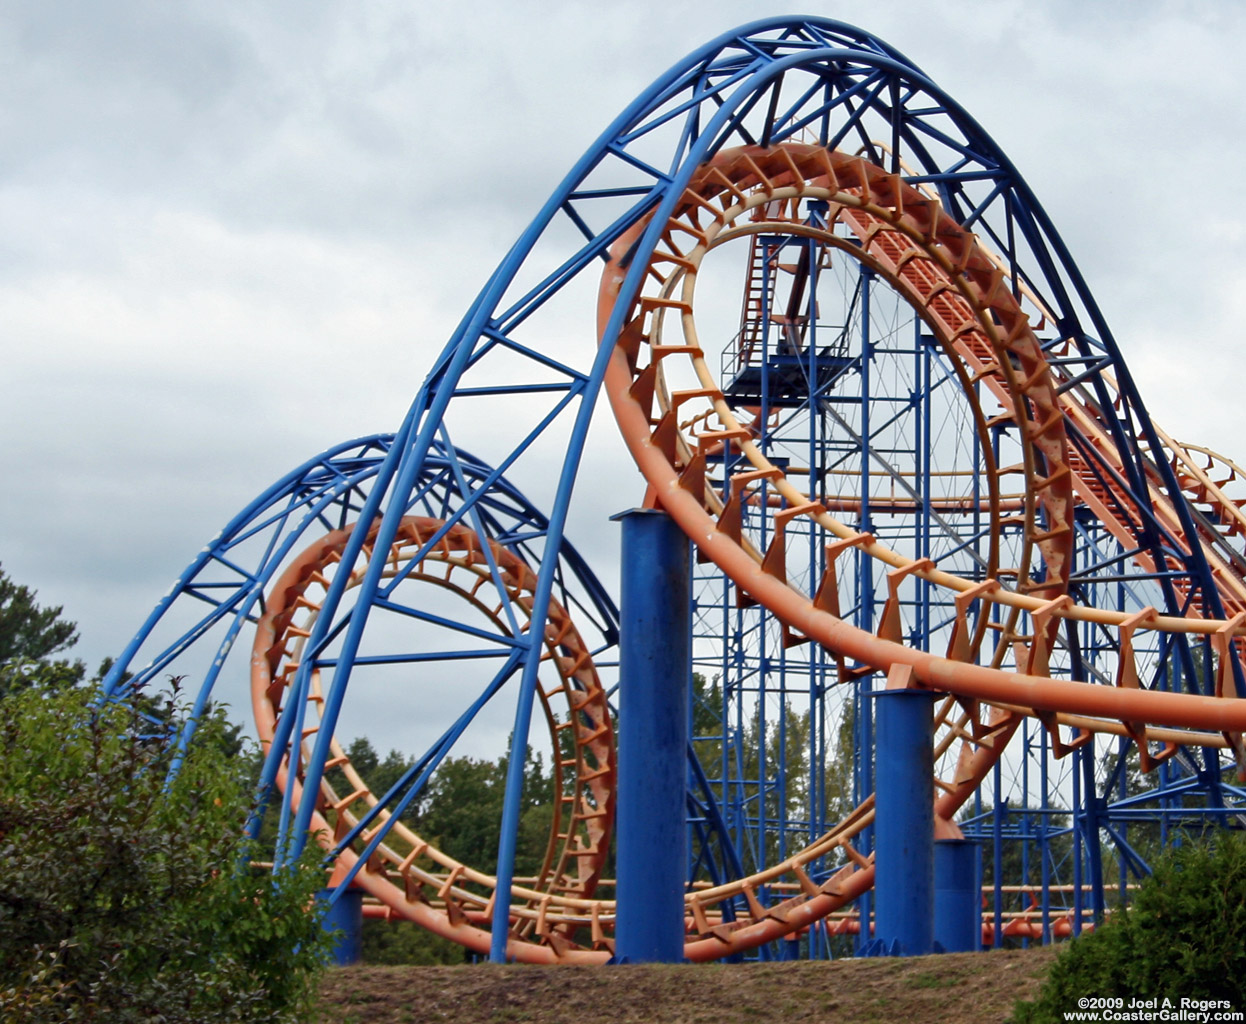 Multi-colored roller coaster